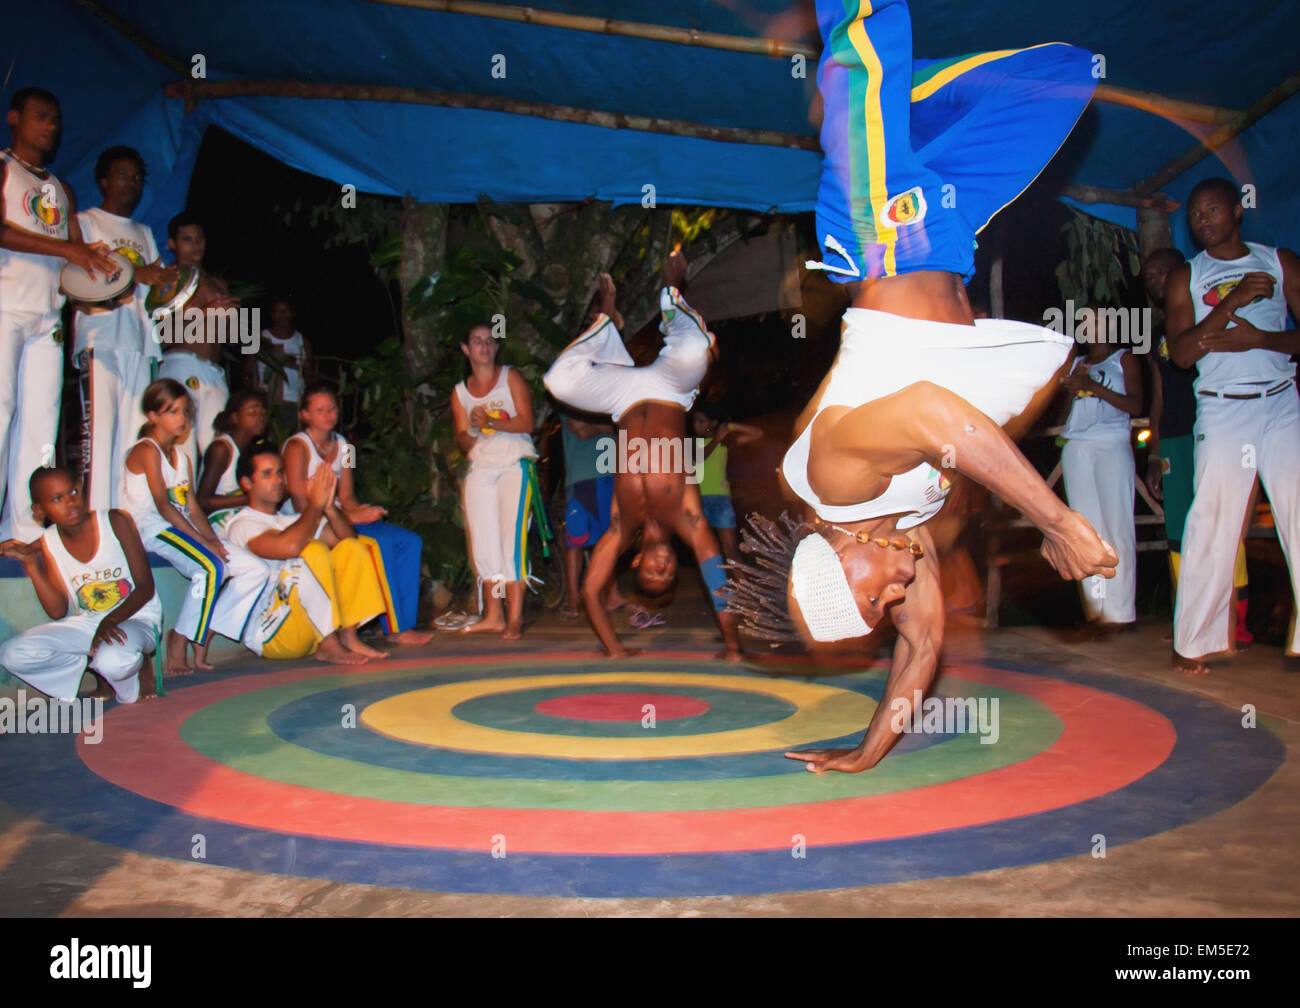 Brasilianische Kampfkunst/Tanz-Praxis der Capoeira; Itacare, Bahia,  Brasilien Stockfotografie - Alamy